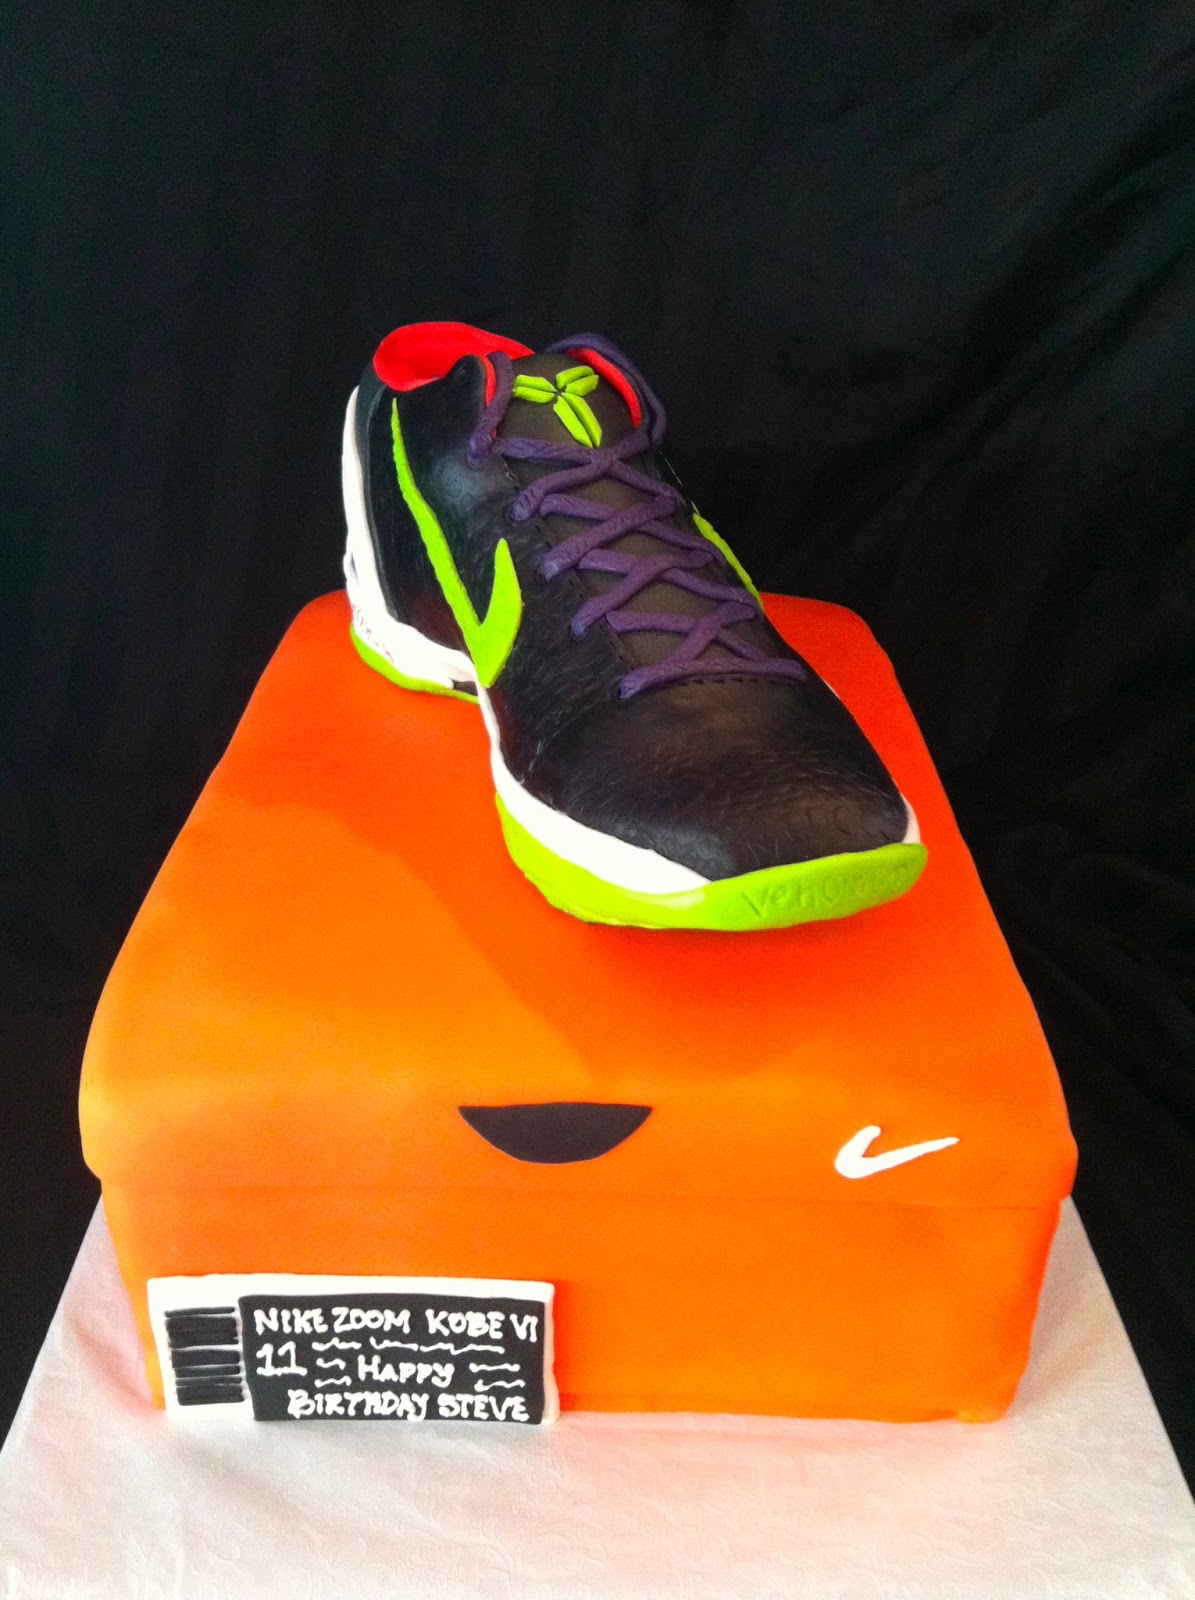 Nike Shoe Box Cake